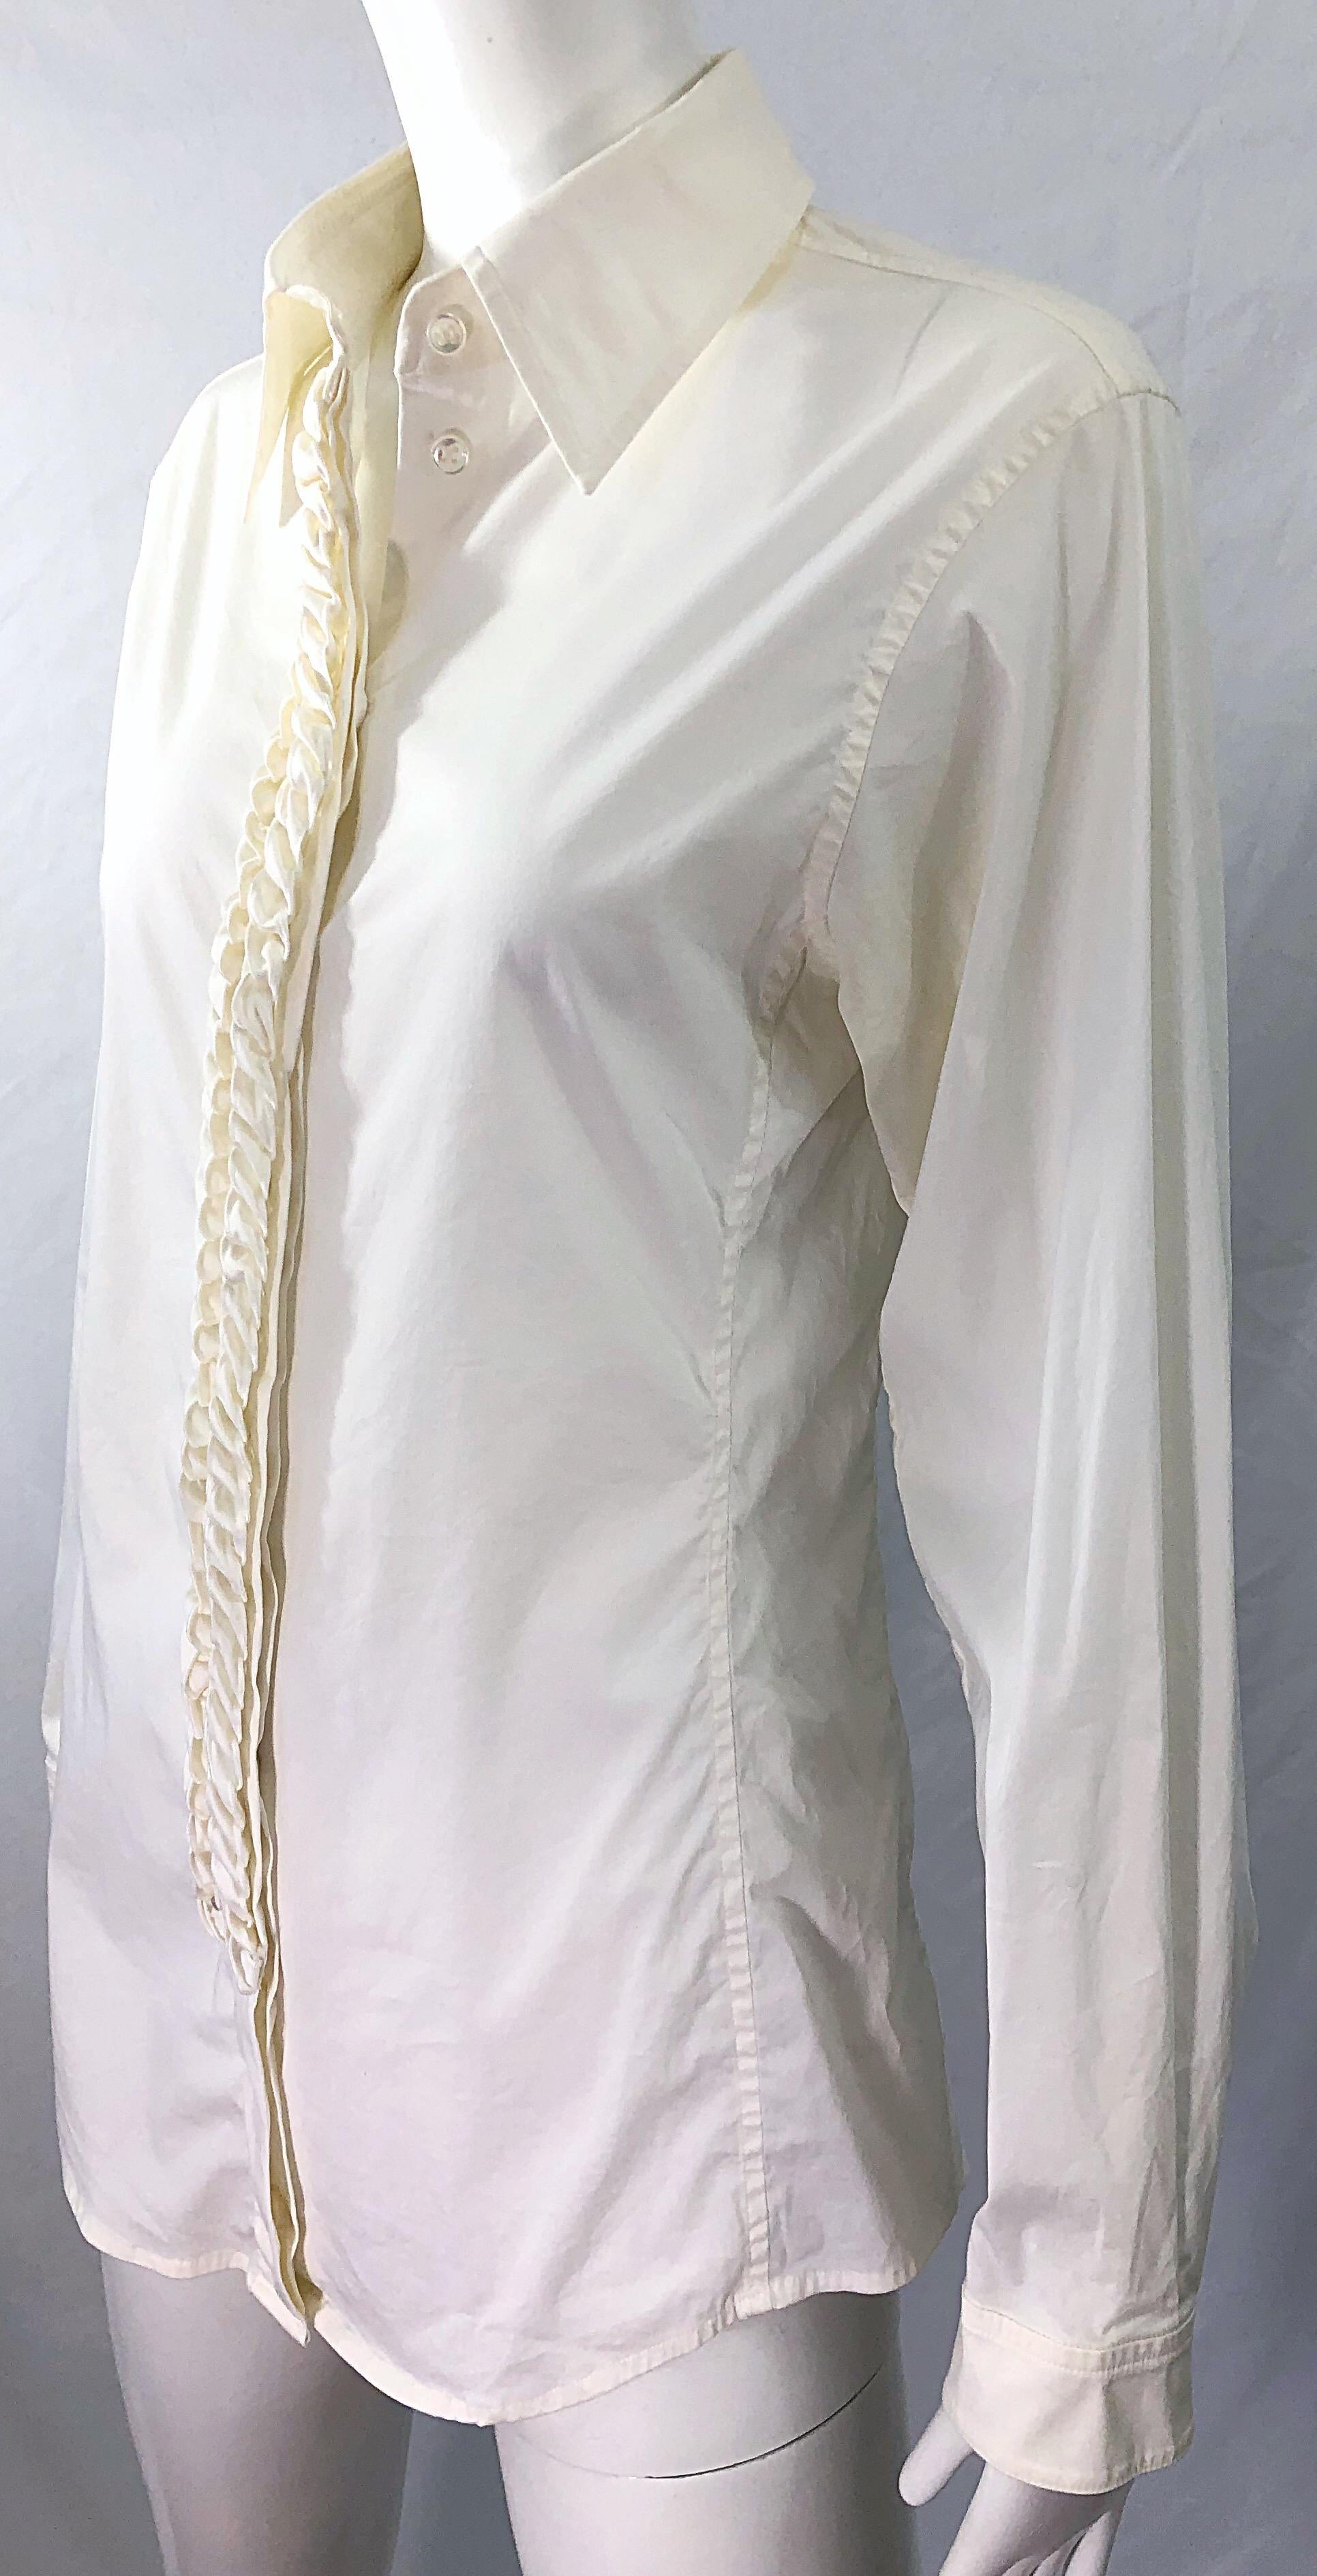 Yves Saint Laurent by Tom Ford YSL Size 40 / 8 Ivory White Tuxedo Blouse Shirt For Sale 8